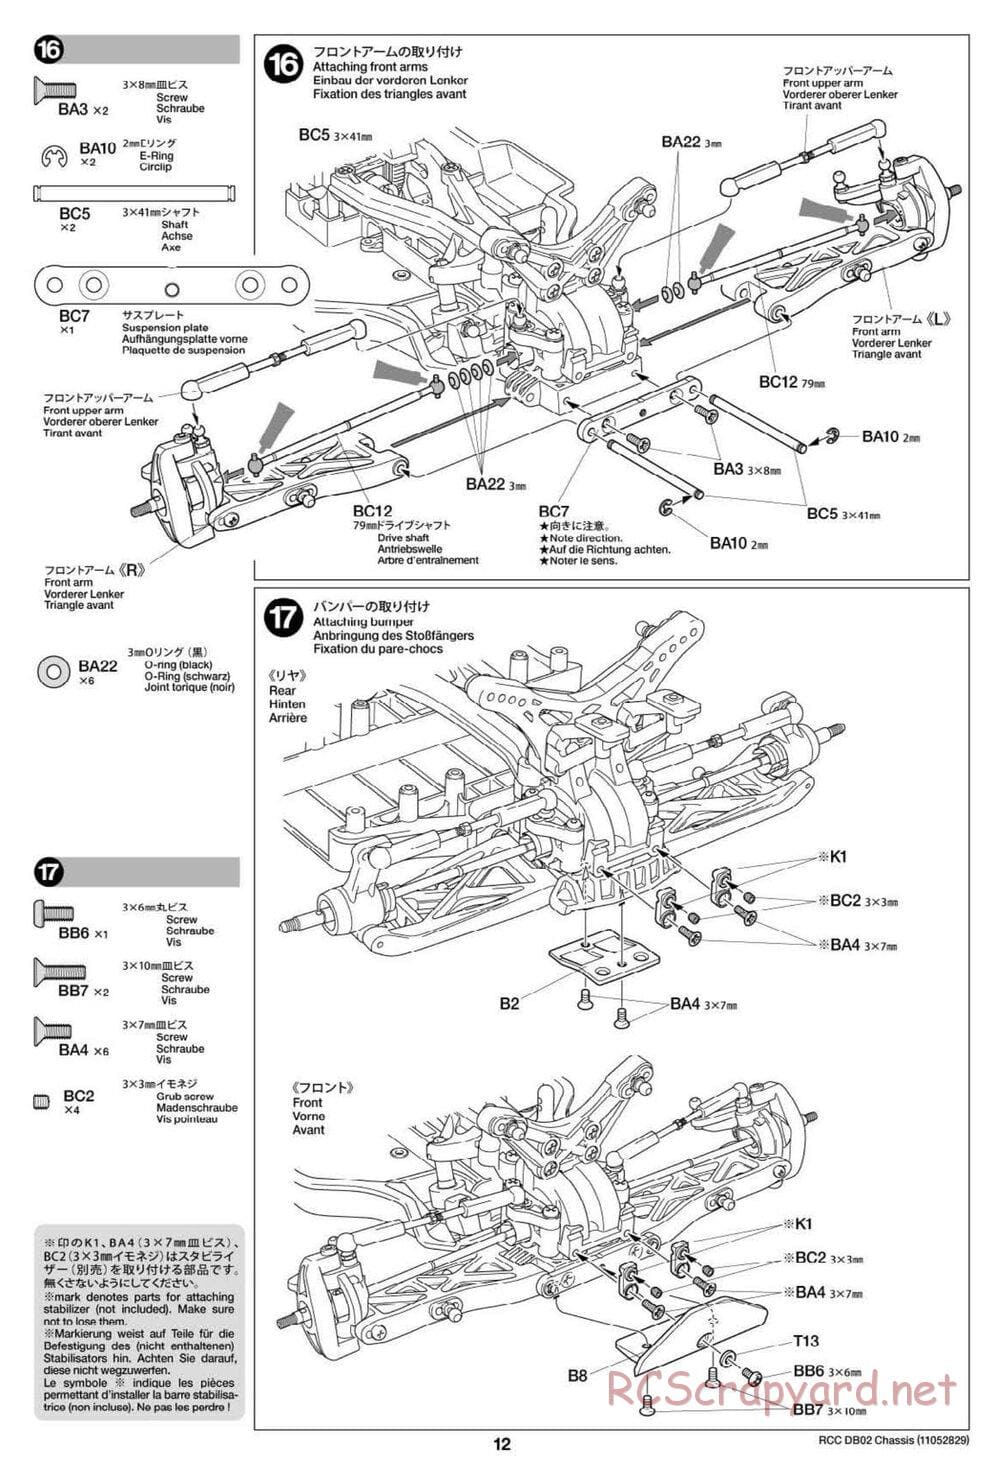 Tamiya - Leonis - DB-02 Chassis - Manual - Page 12